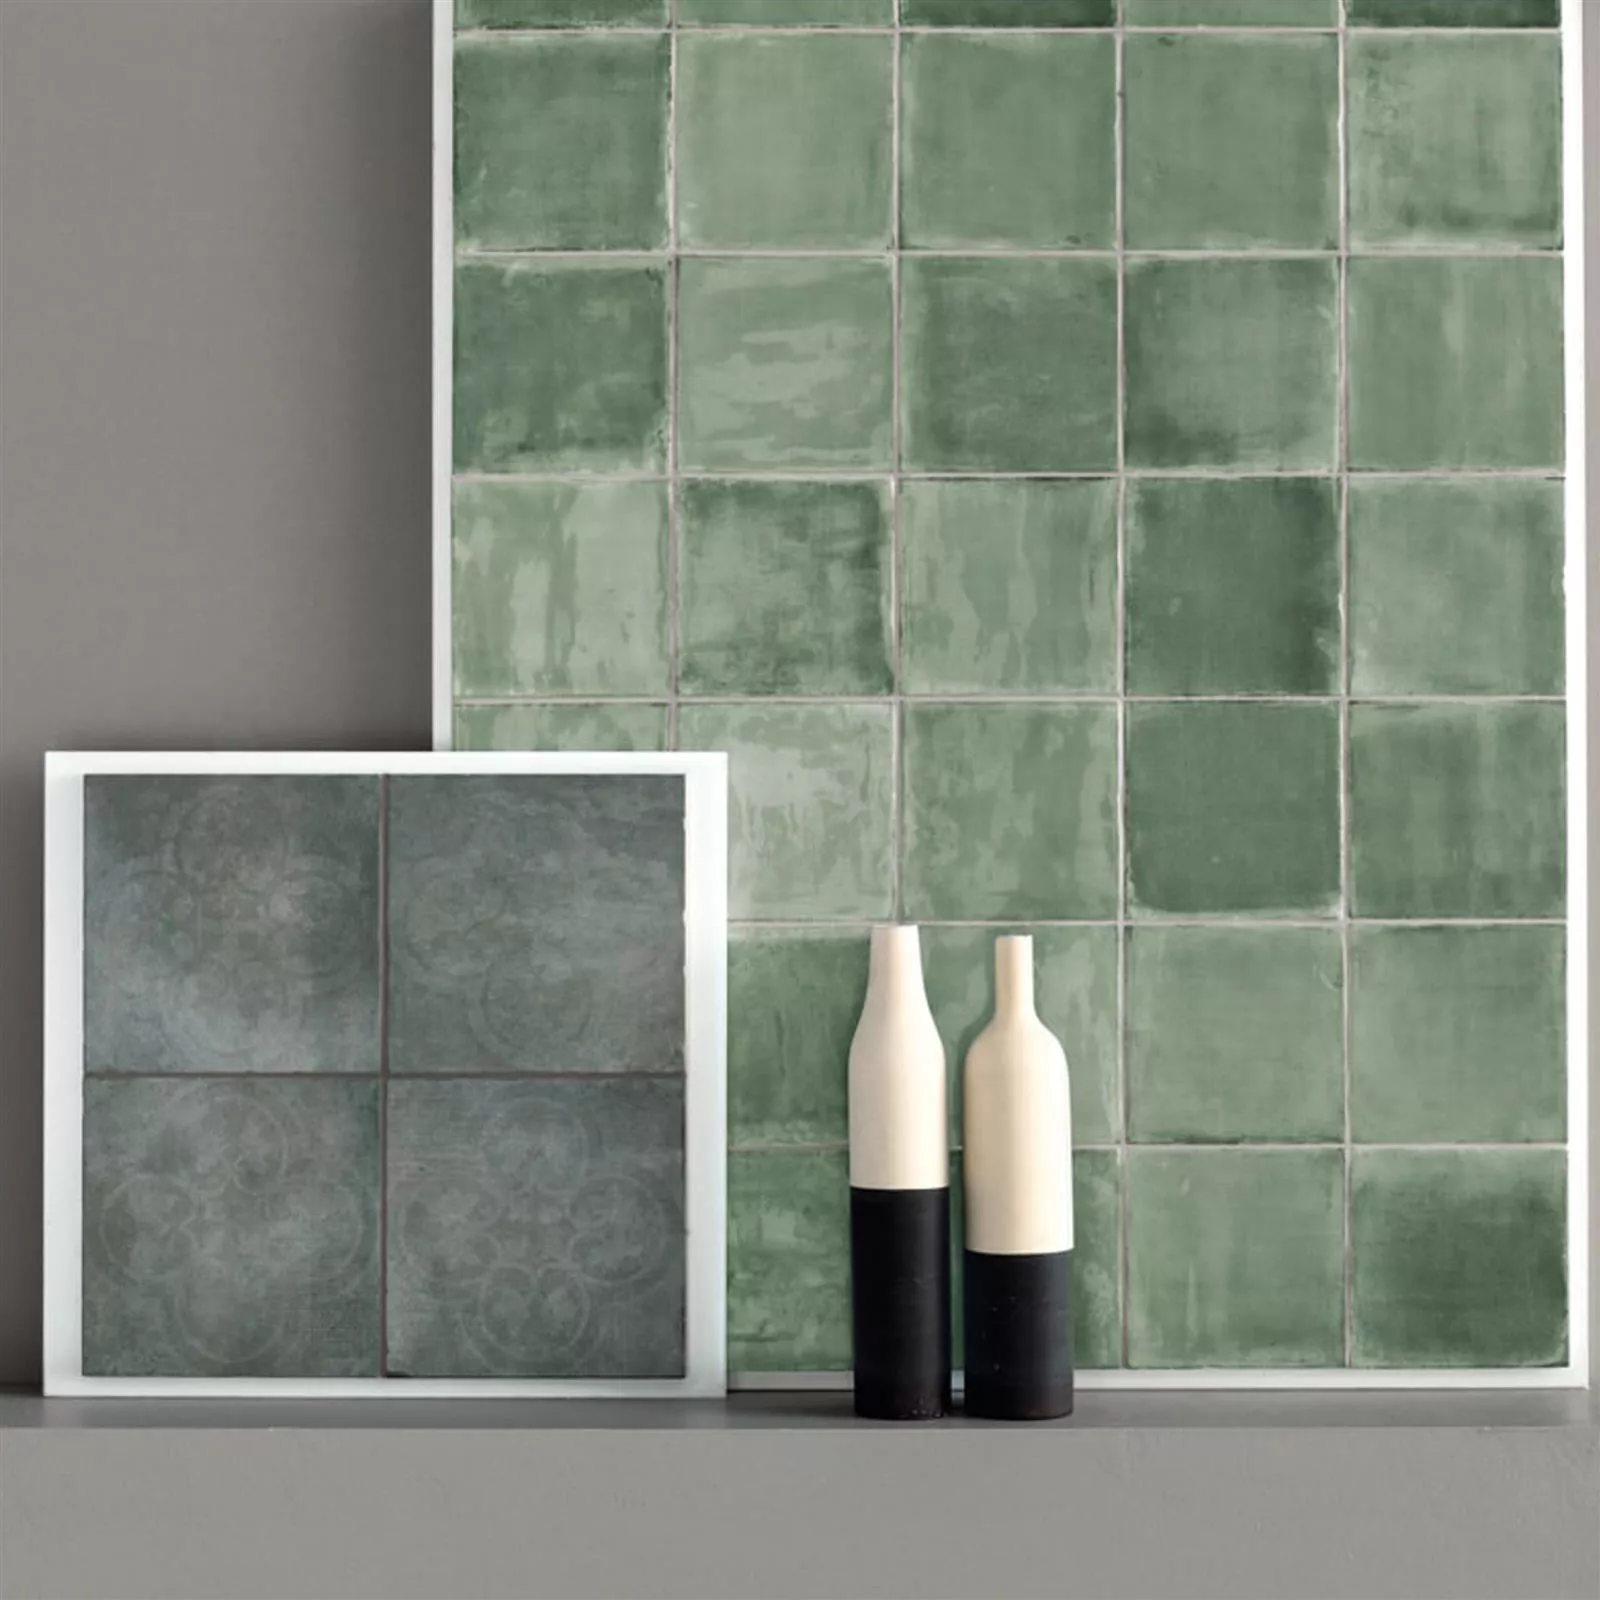 Sample Wall Tiles Marbella Waved 15x15cm Green